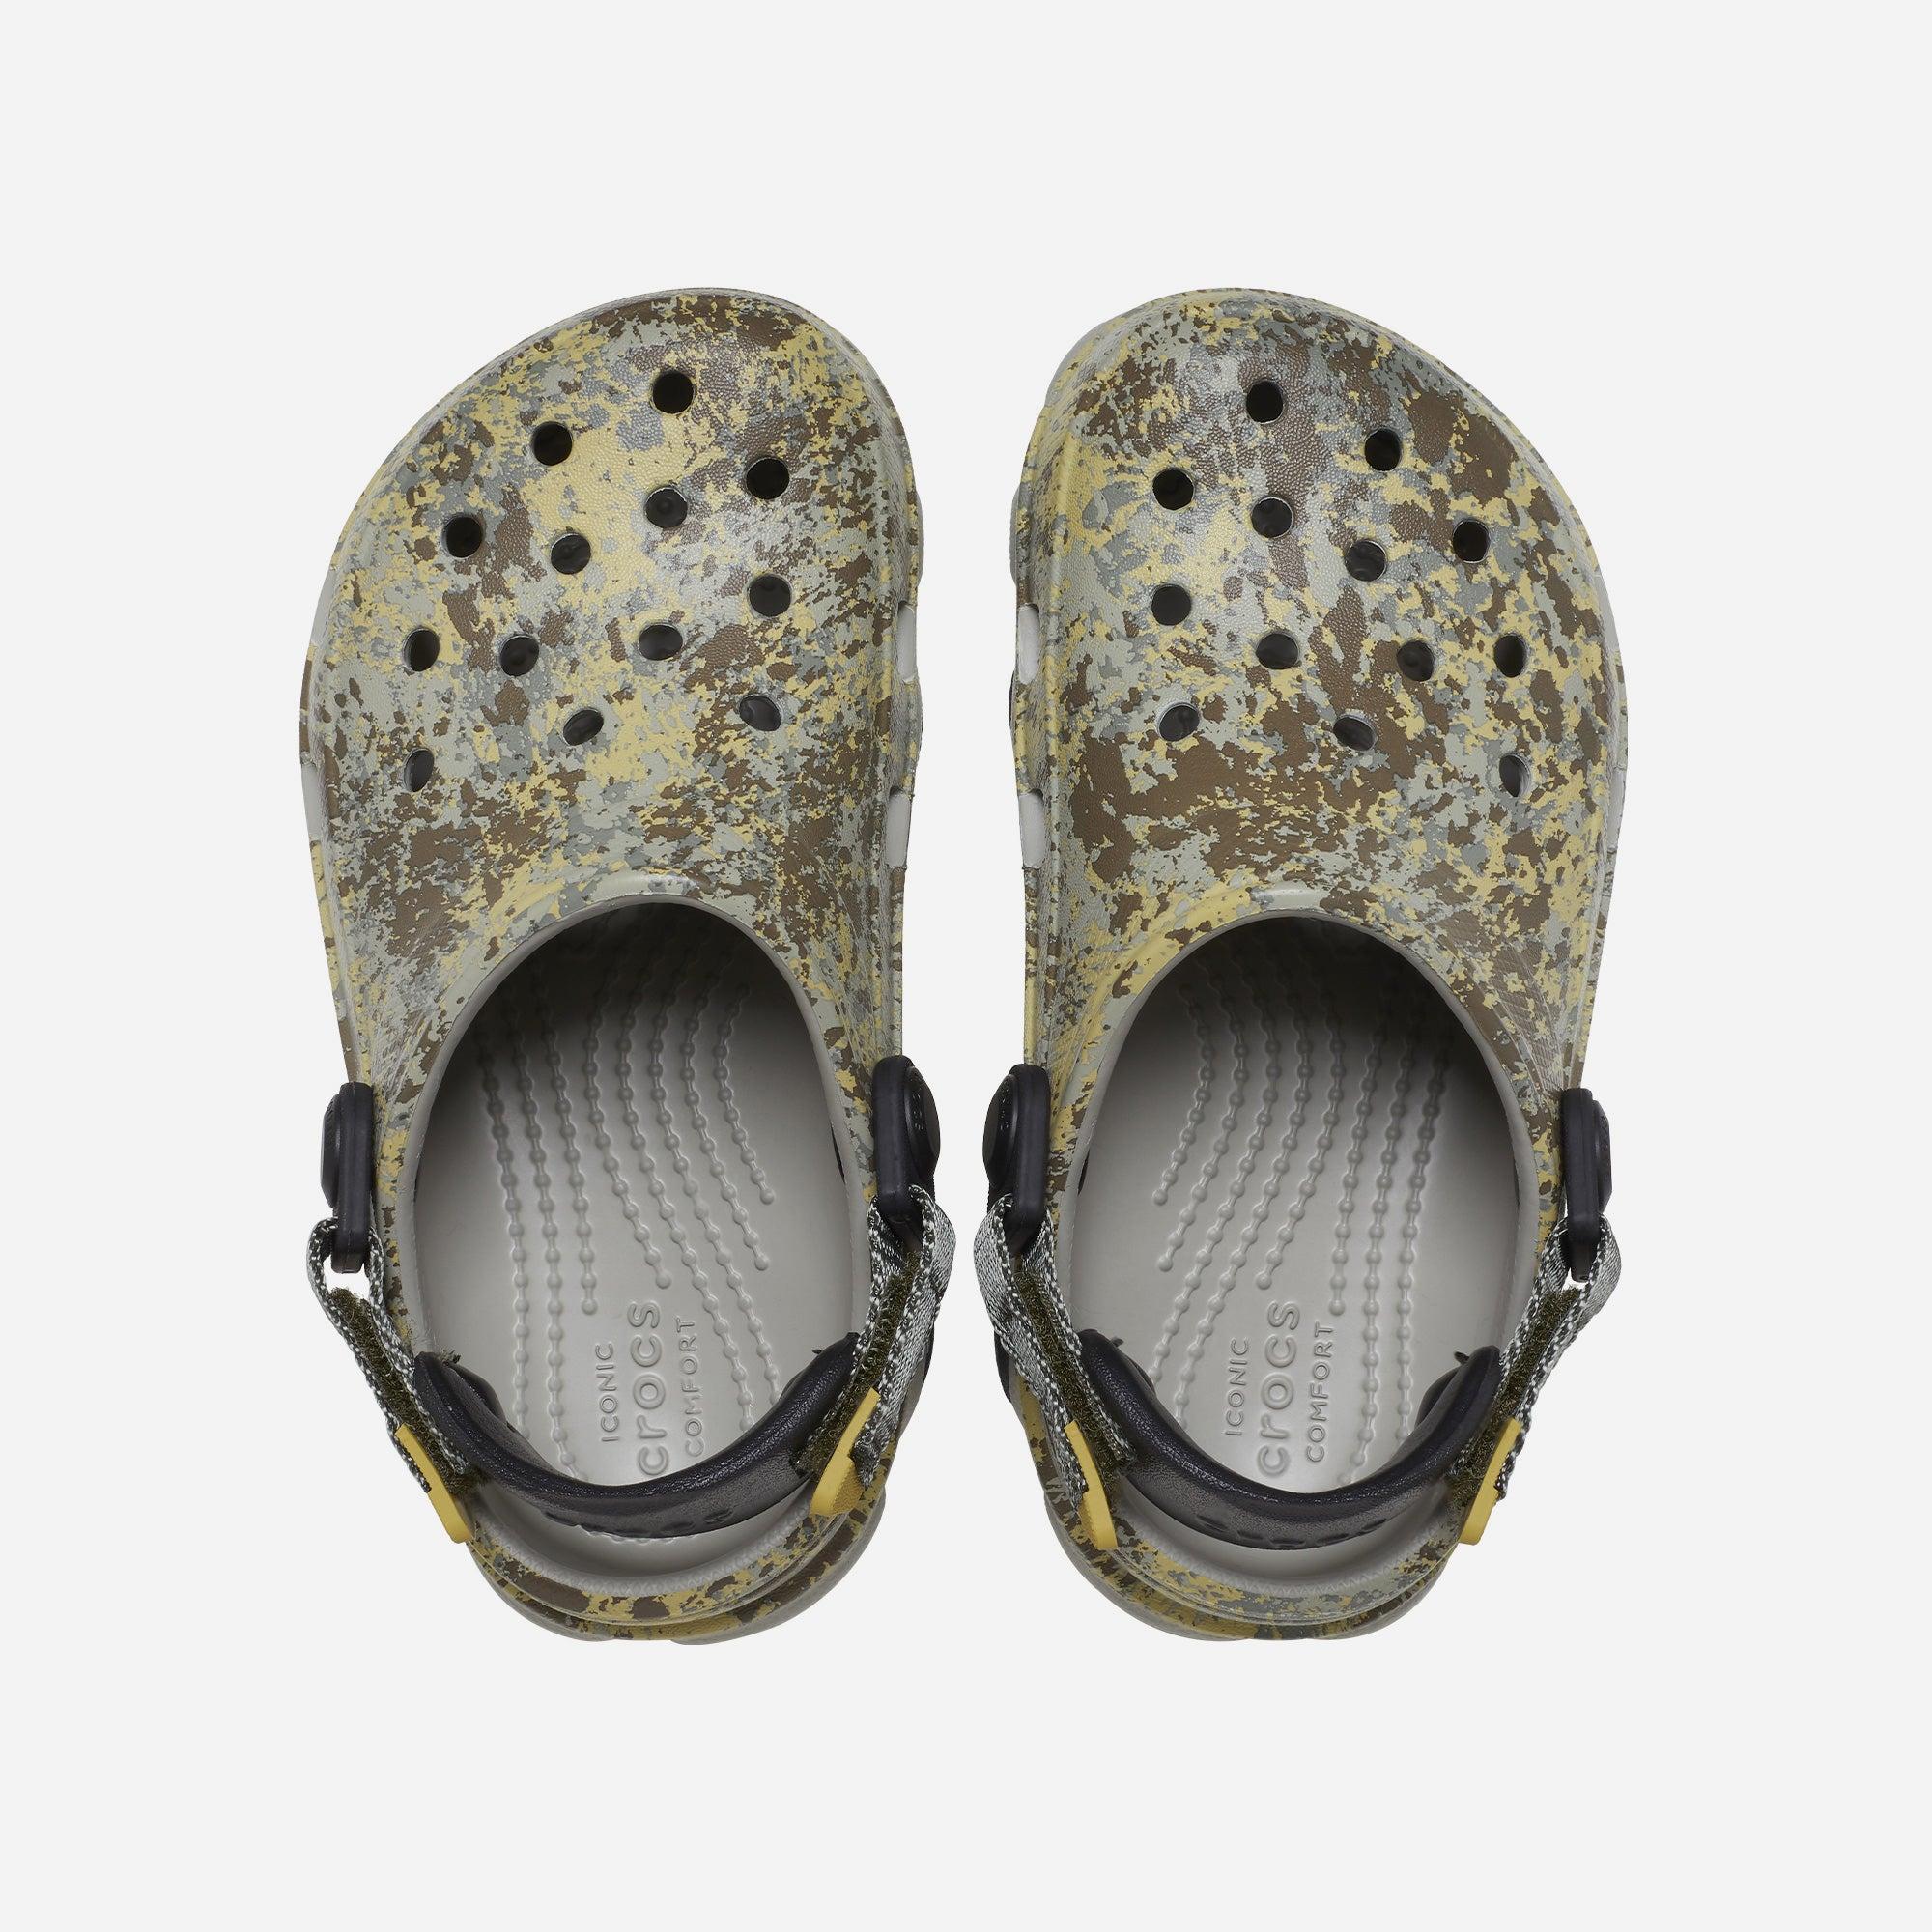 Giày nhựa trẻ em Crocs All Terrain Moss Toddler - 209190-1LN